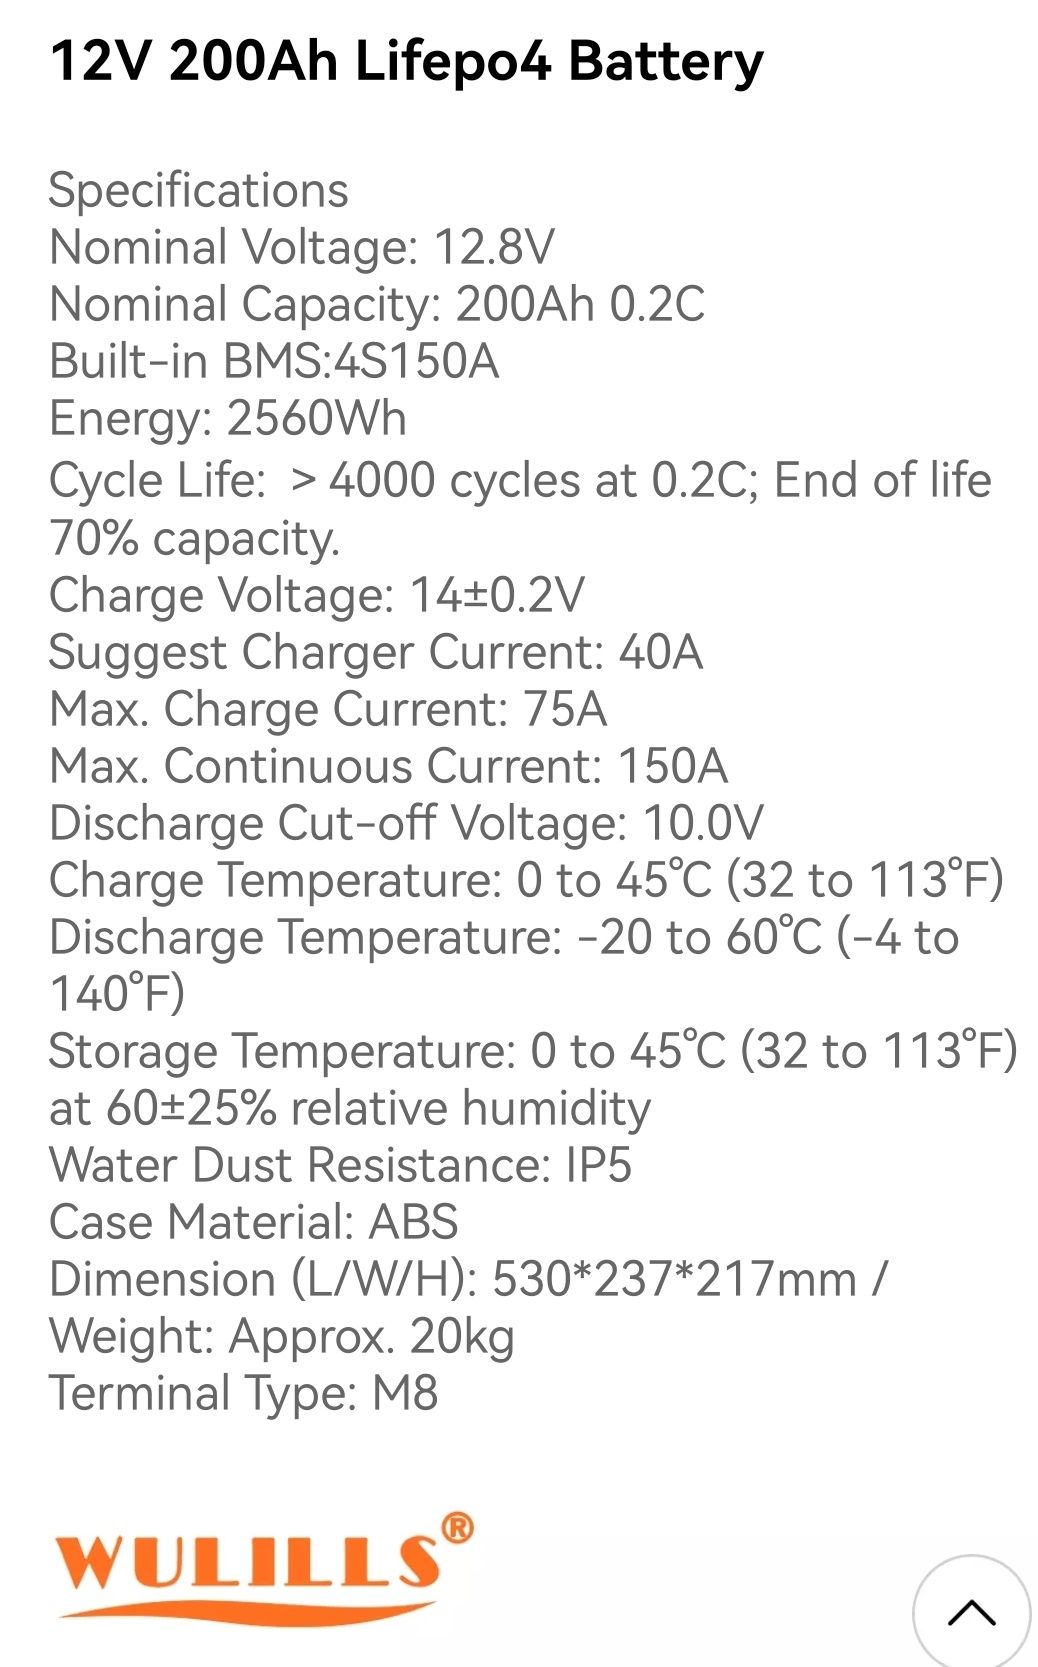 Батарея lifepo4 12v 200ah - 2560 Вт/год, 4000+ циклів